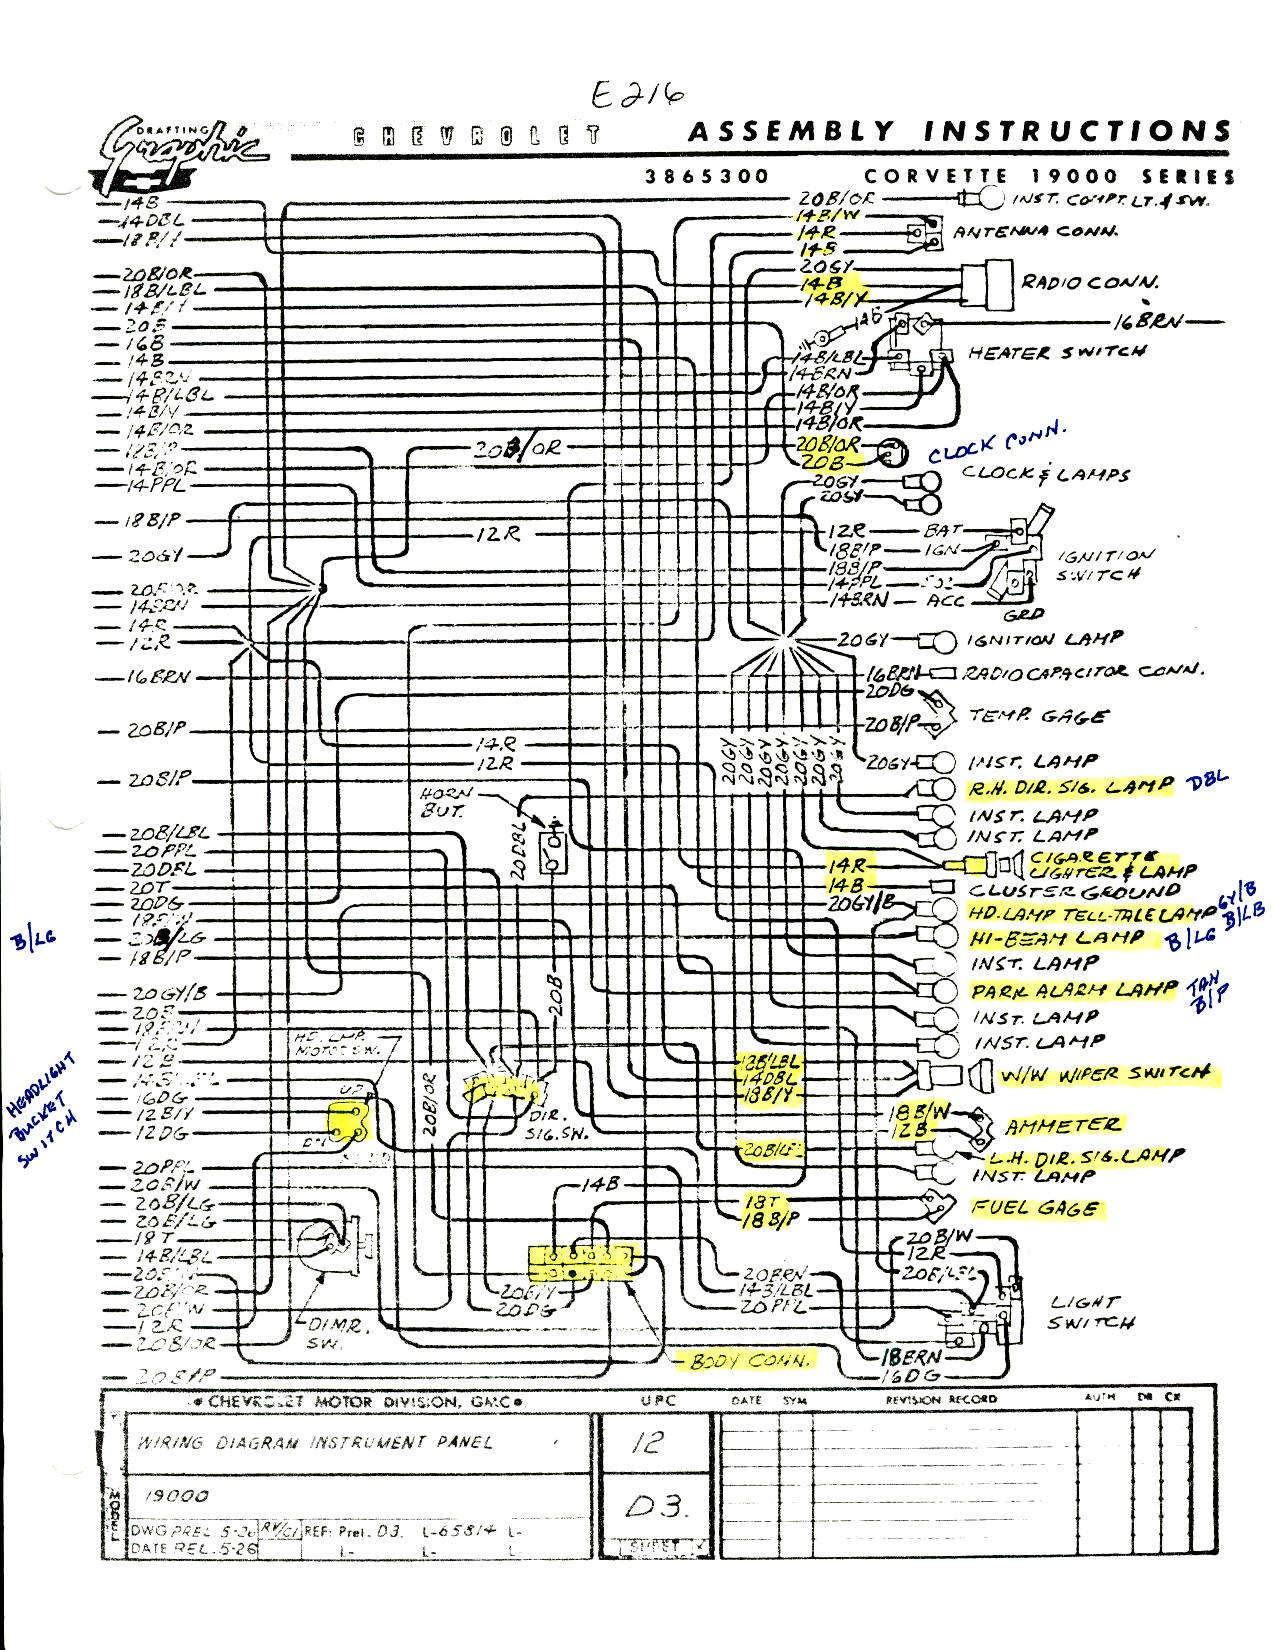 I need a 1965 wiring diagram - CorvetteForum - Chevrolet Corvette Forum